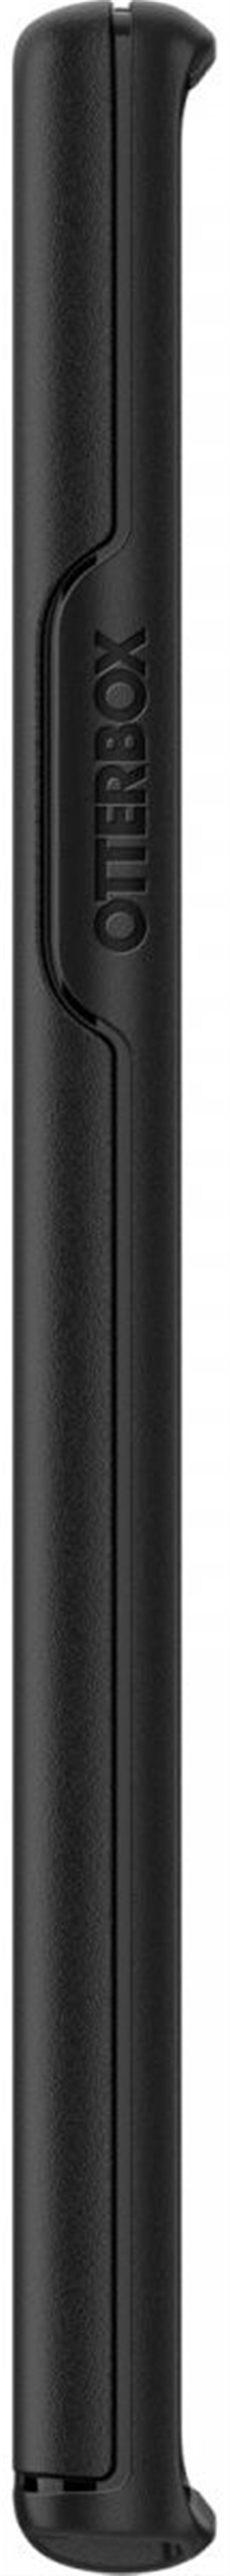 OtterBox Symmetry Case Samsung Galaxy S22 Ultra Black